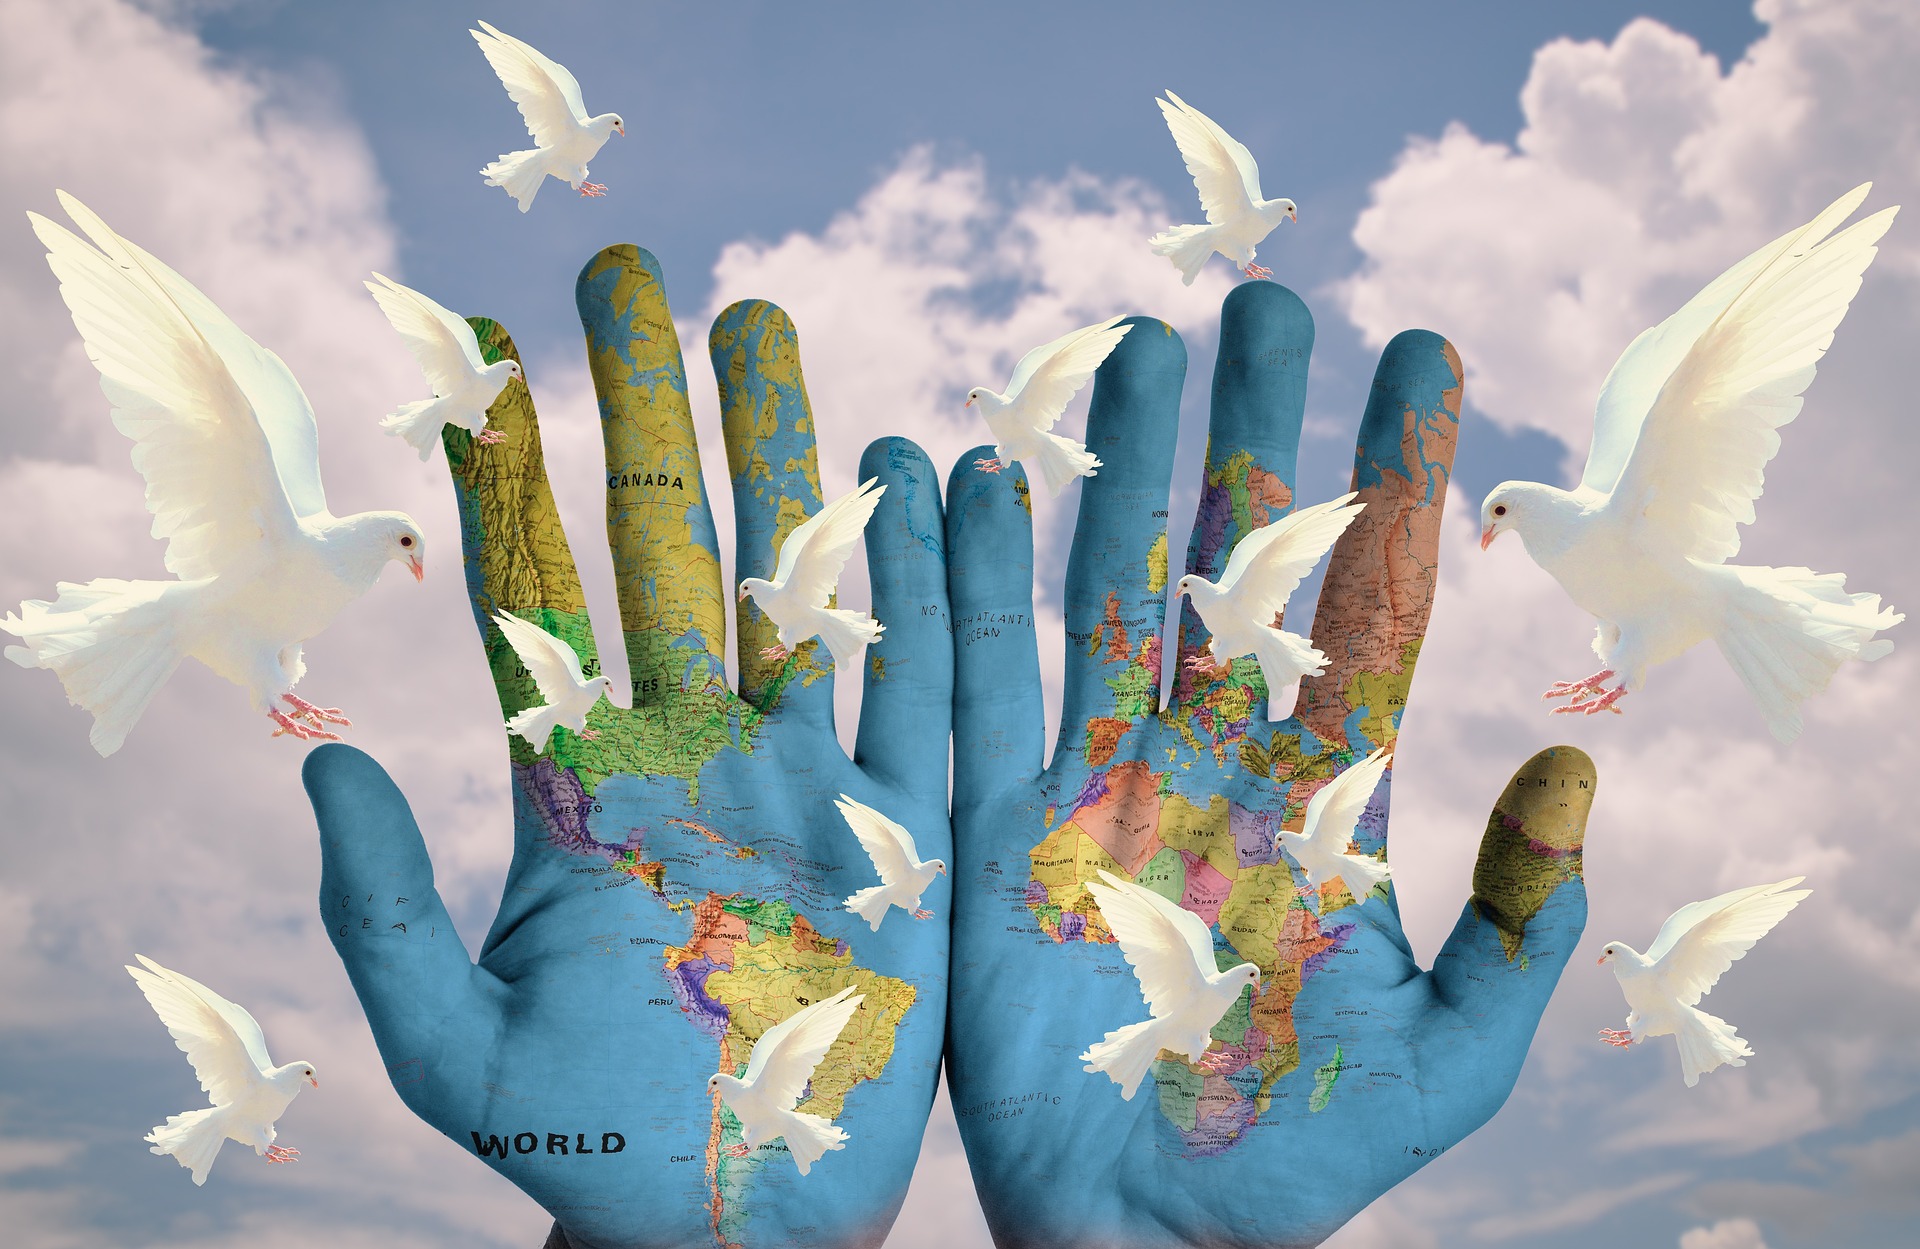 Metáfora de un mundo en armonía. Imagen de S. Hermann & F. Richter en Pixabay